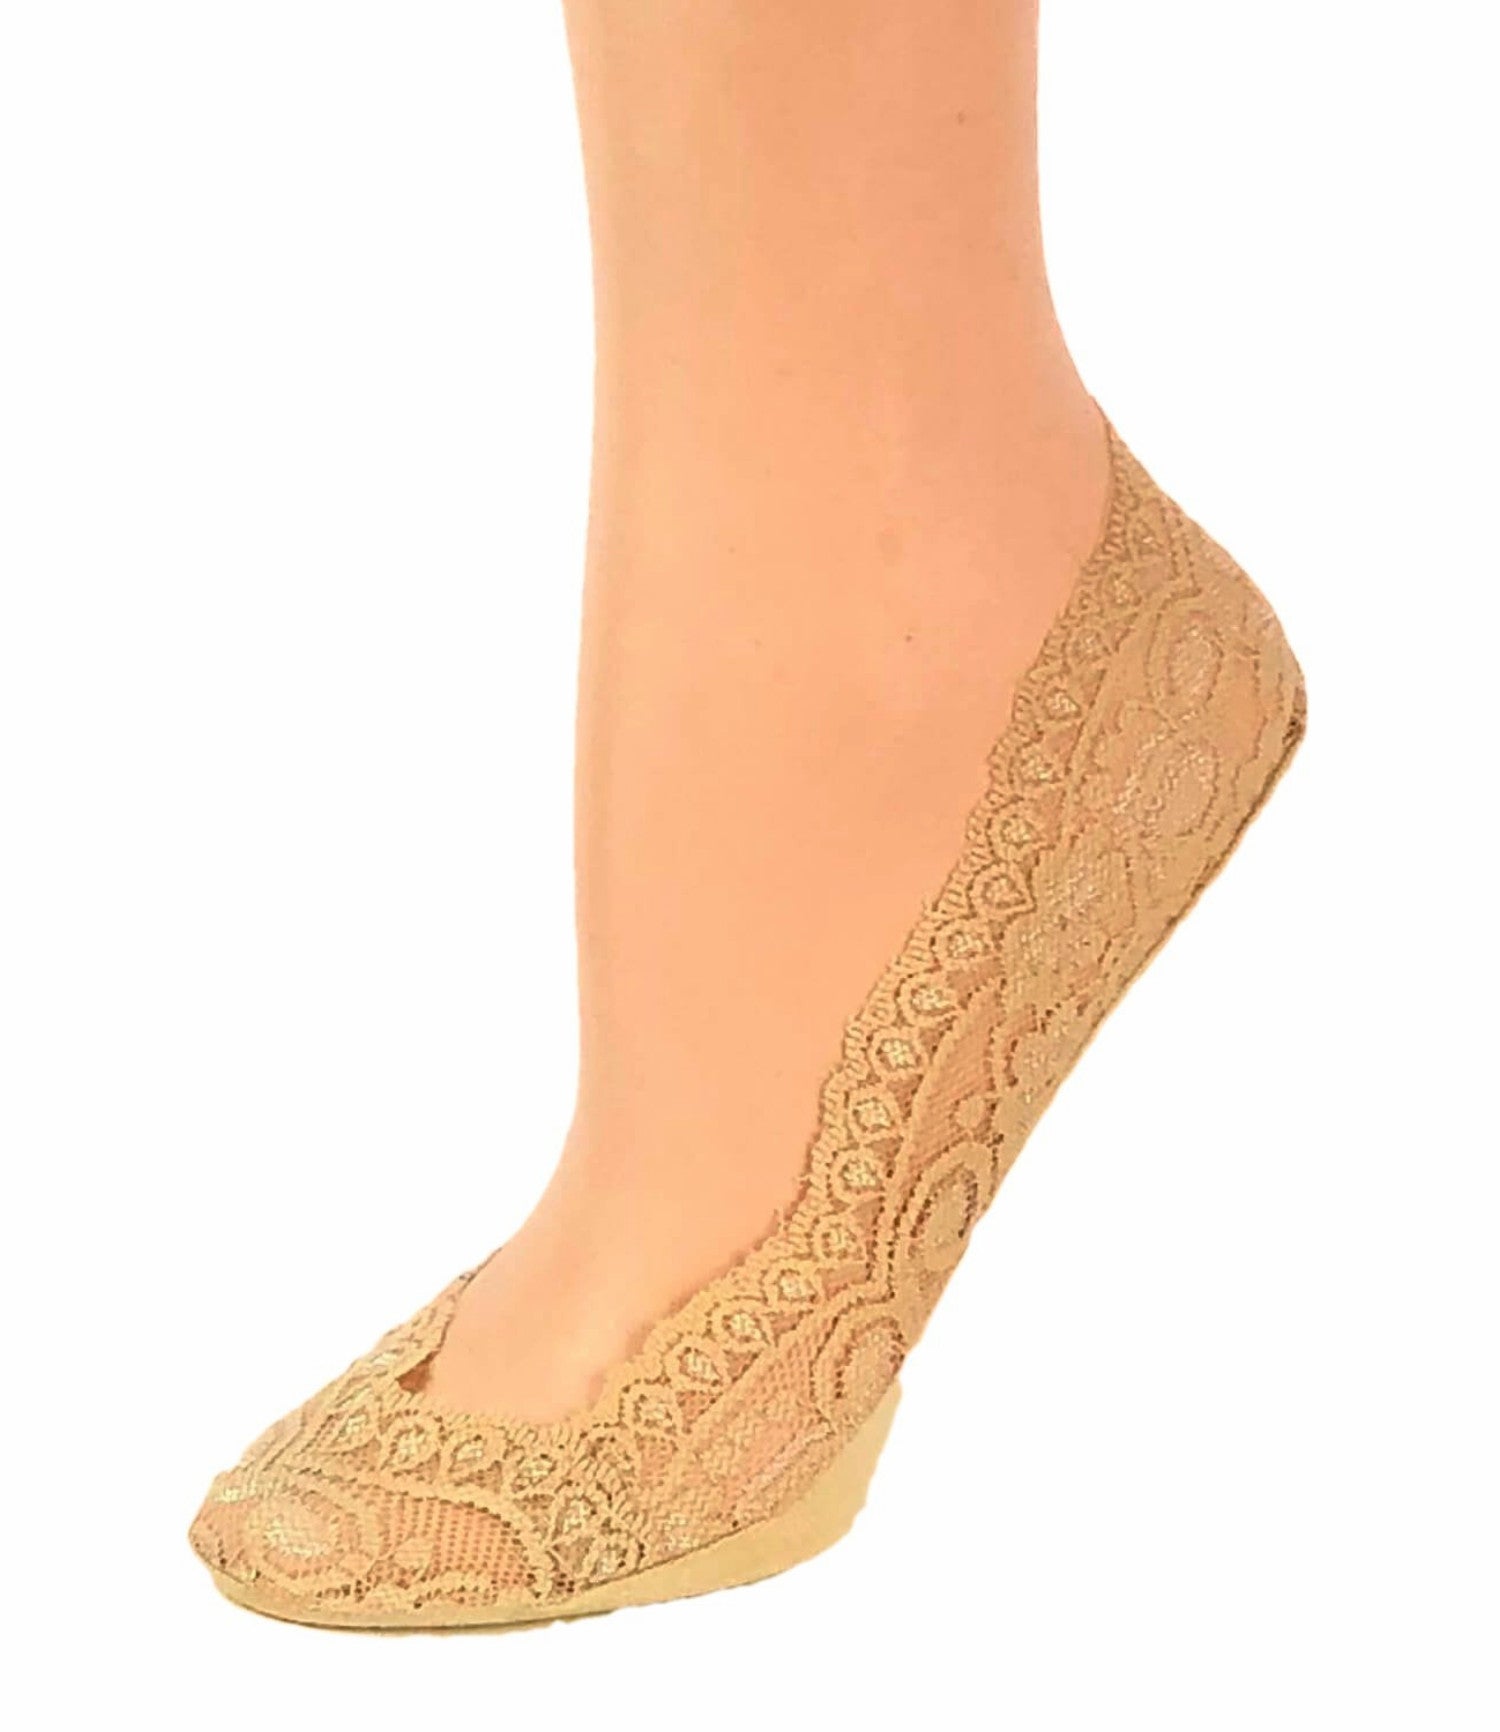 Gorgeous Skin Patterned Ankle Sheer Socks - Global Trendz Fashion®